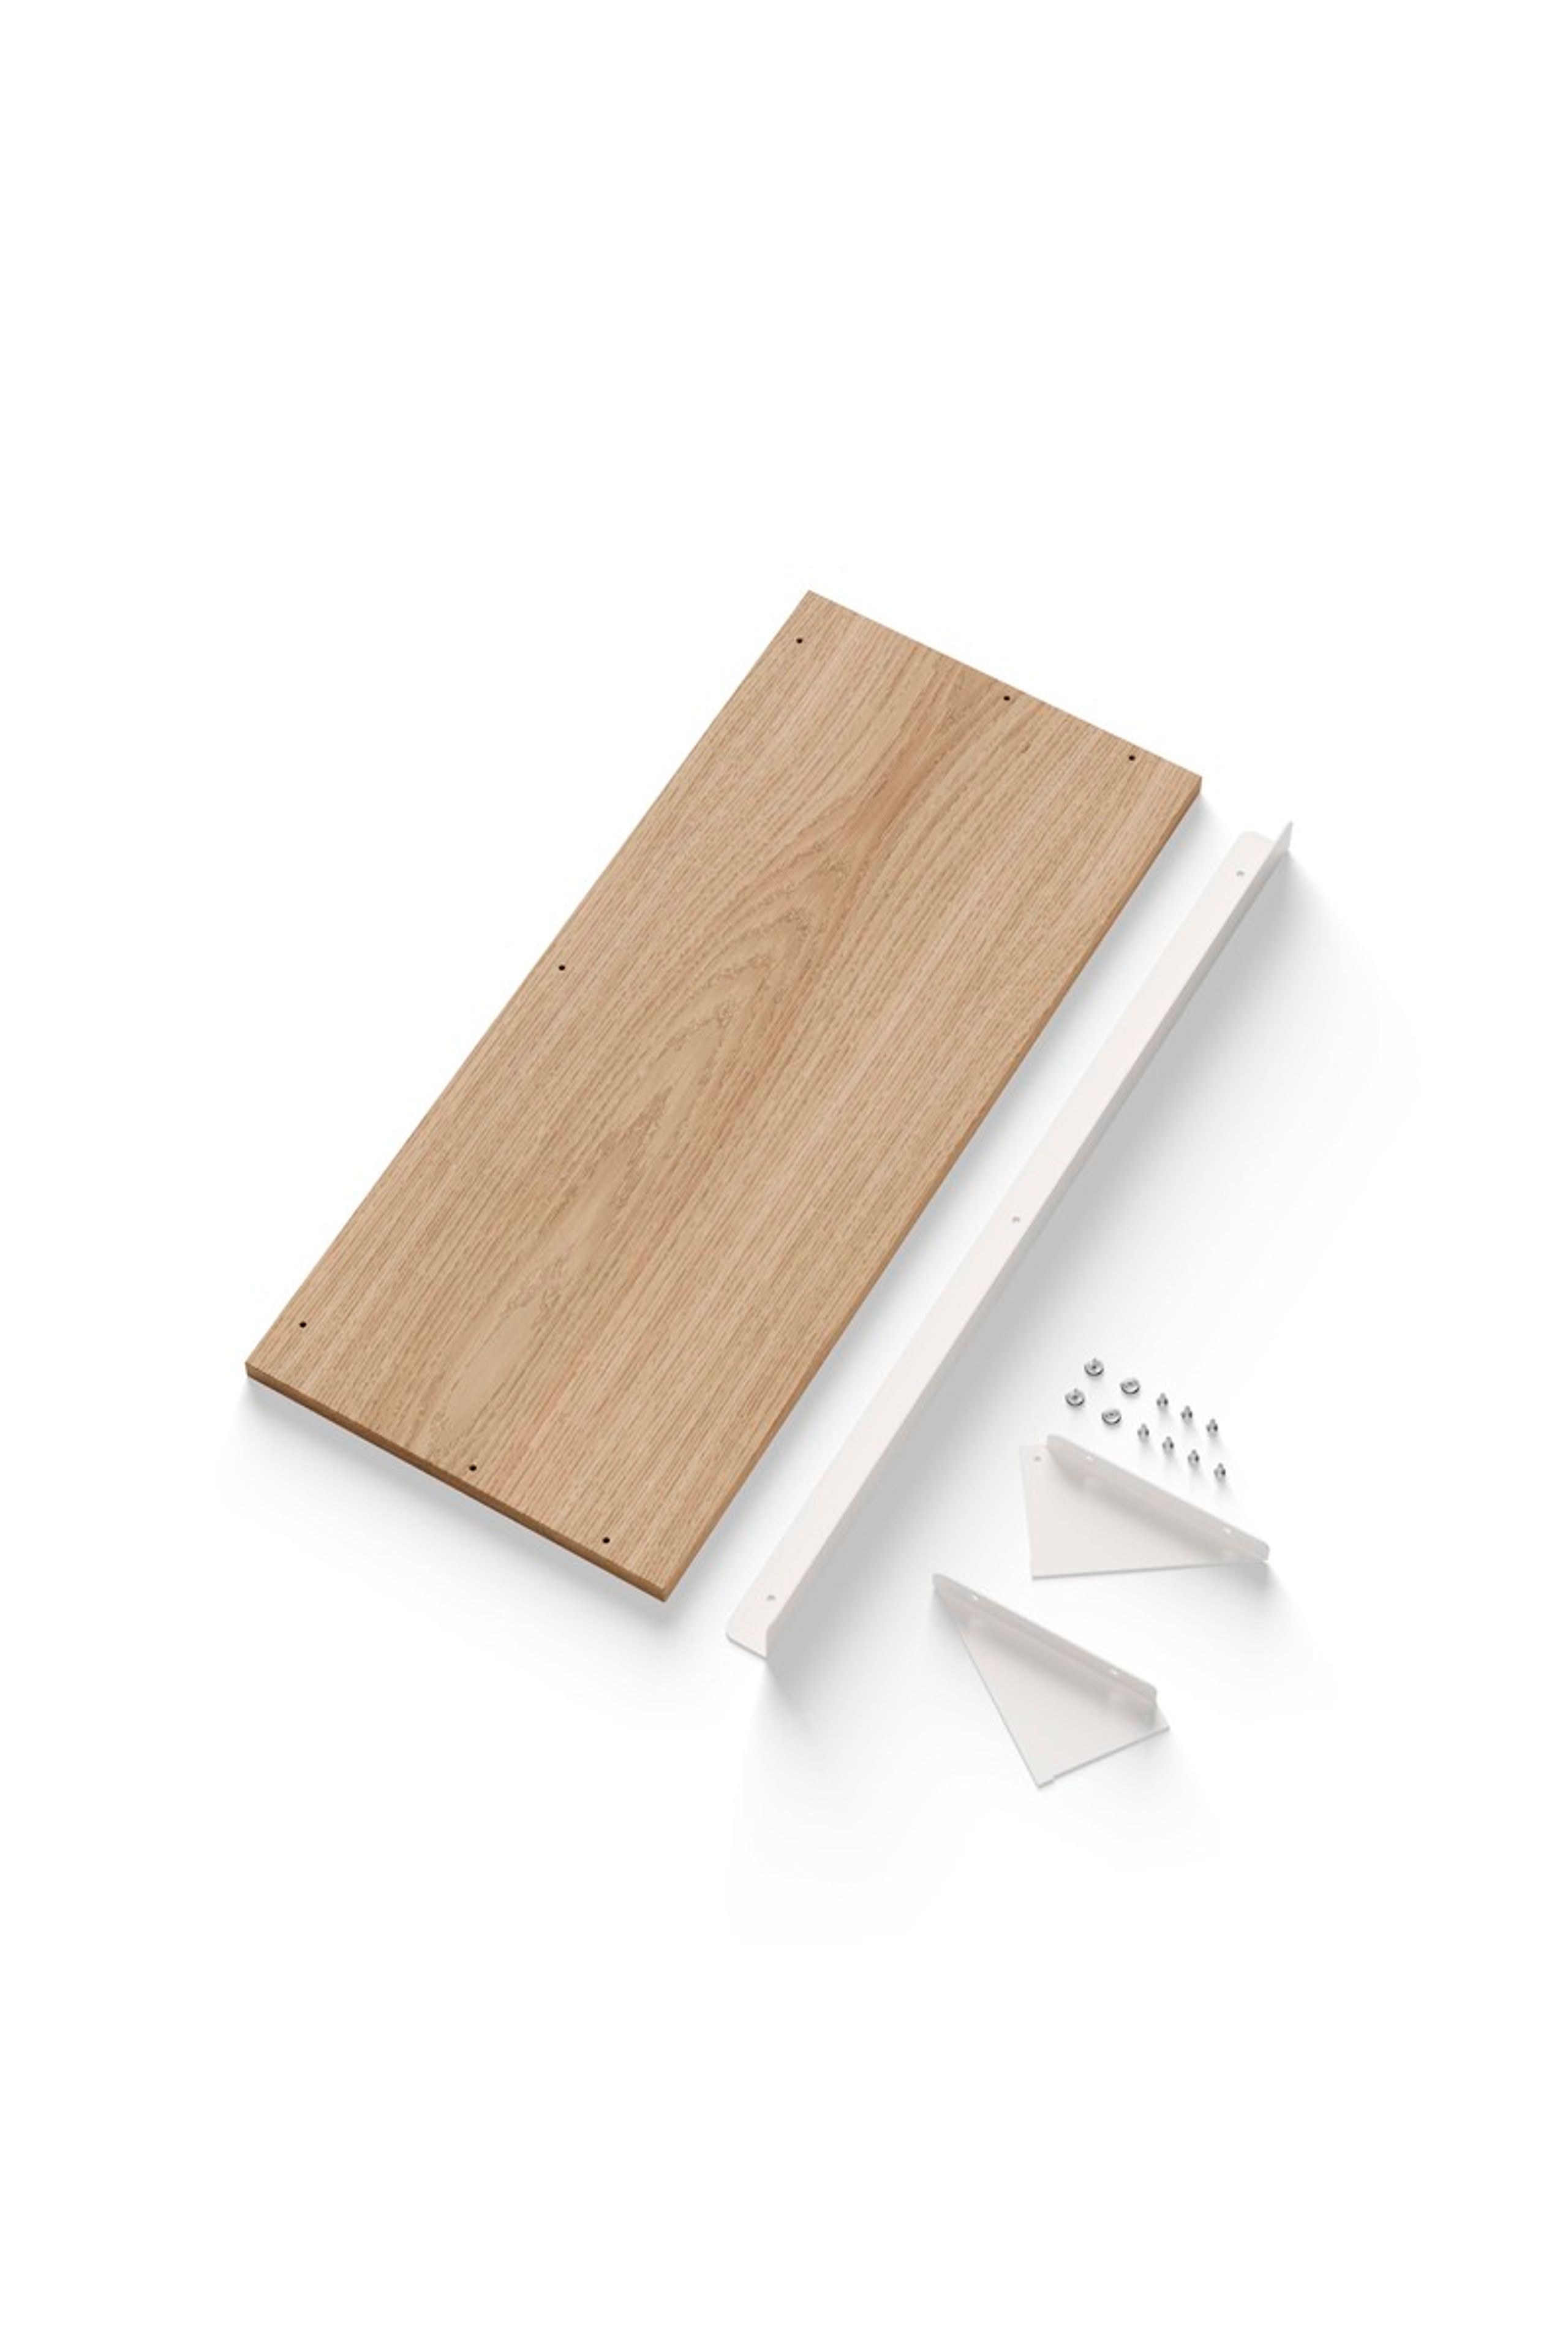 New Works - Plank - NEW WORKS SHELVING SYSTEM - New Works Magazine Shelf Kit - Oak / White